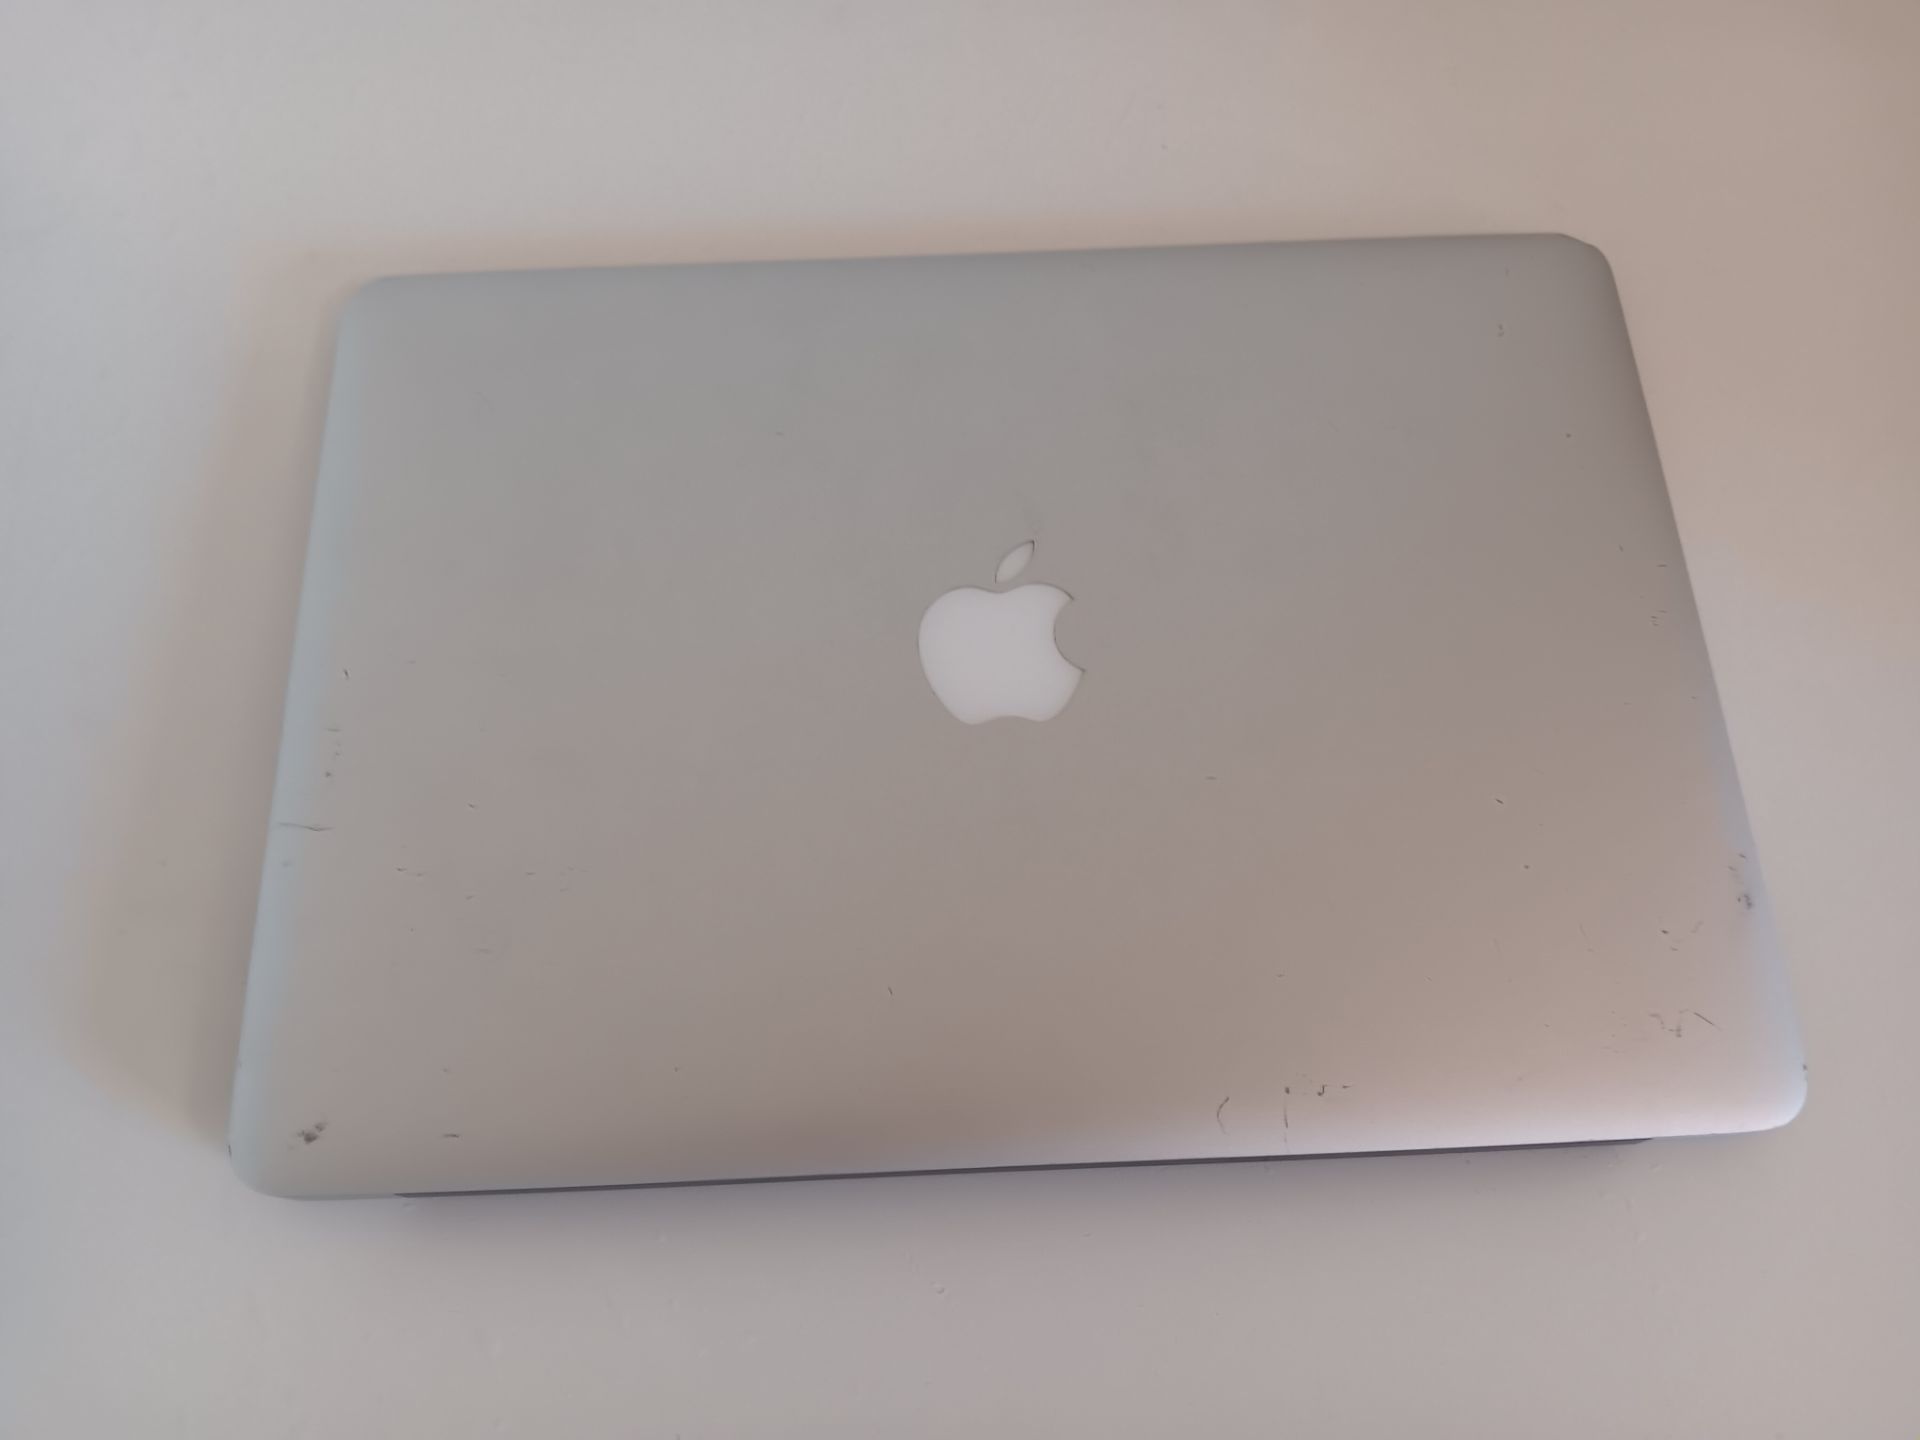 Apple MacBook Air i5 – 1.3GHZ Processor, 4GB Ram & 120GB Hard Drive (Needs Bios Battery & No - Image 4 of 4